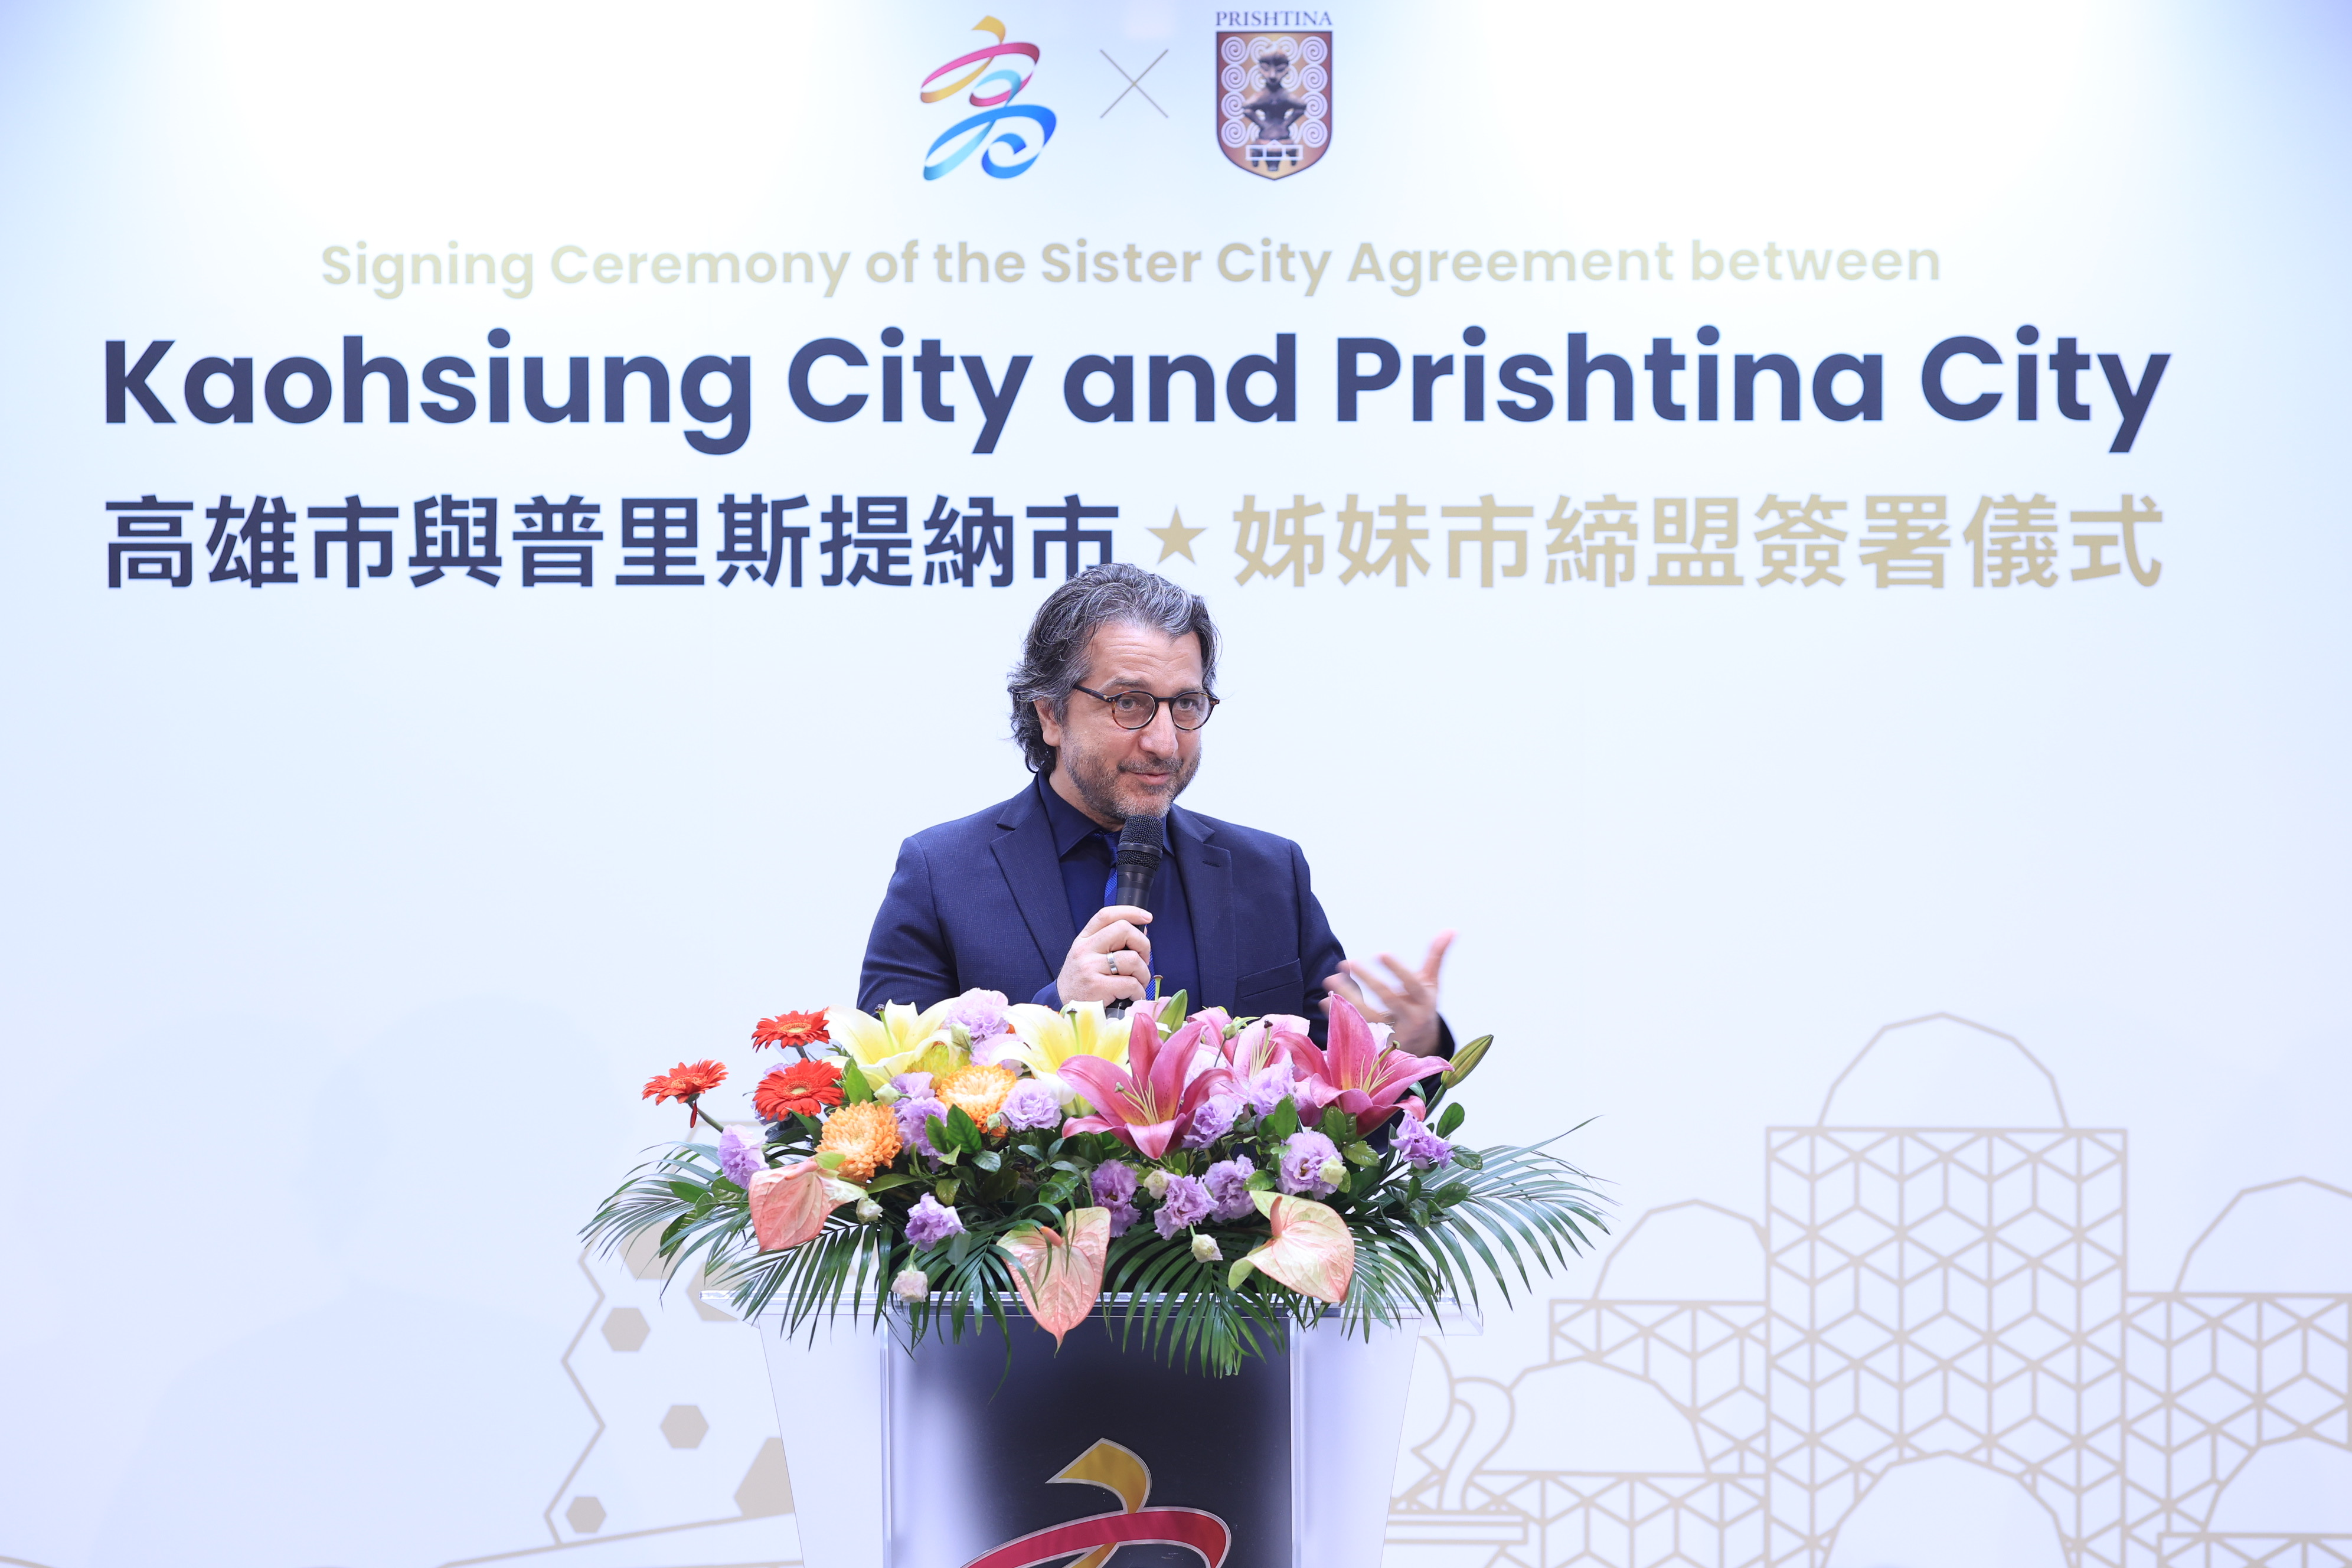 Mayor Përparim Rama of Prishtina city delivered his remarks.